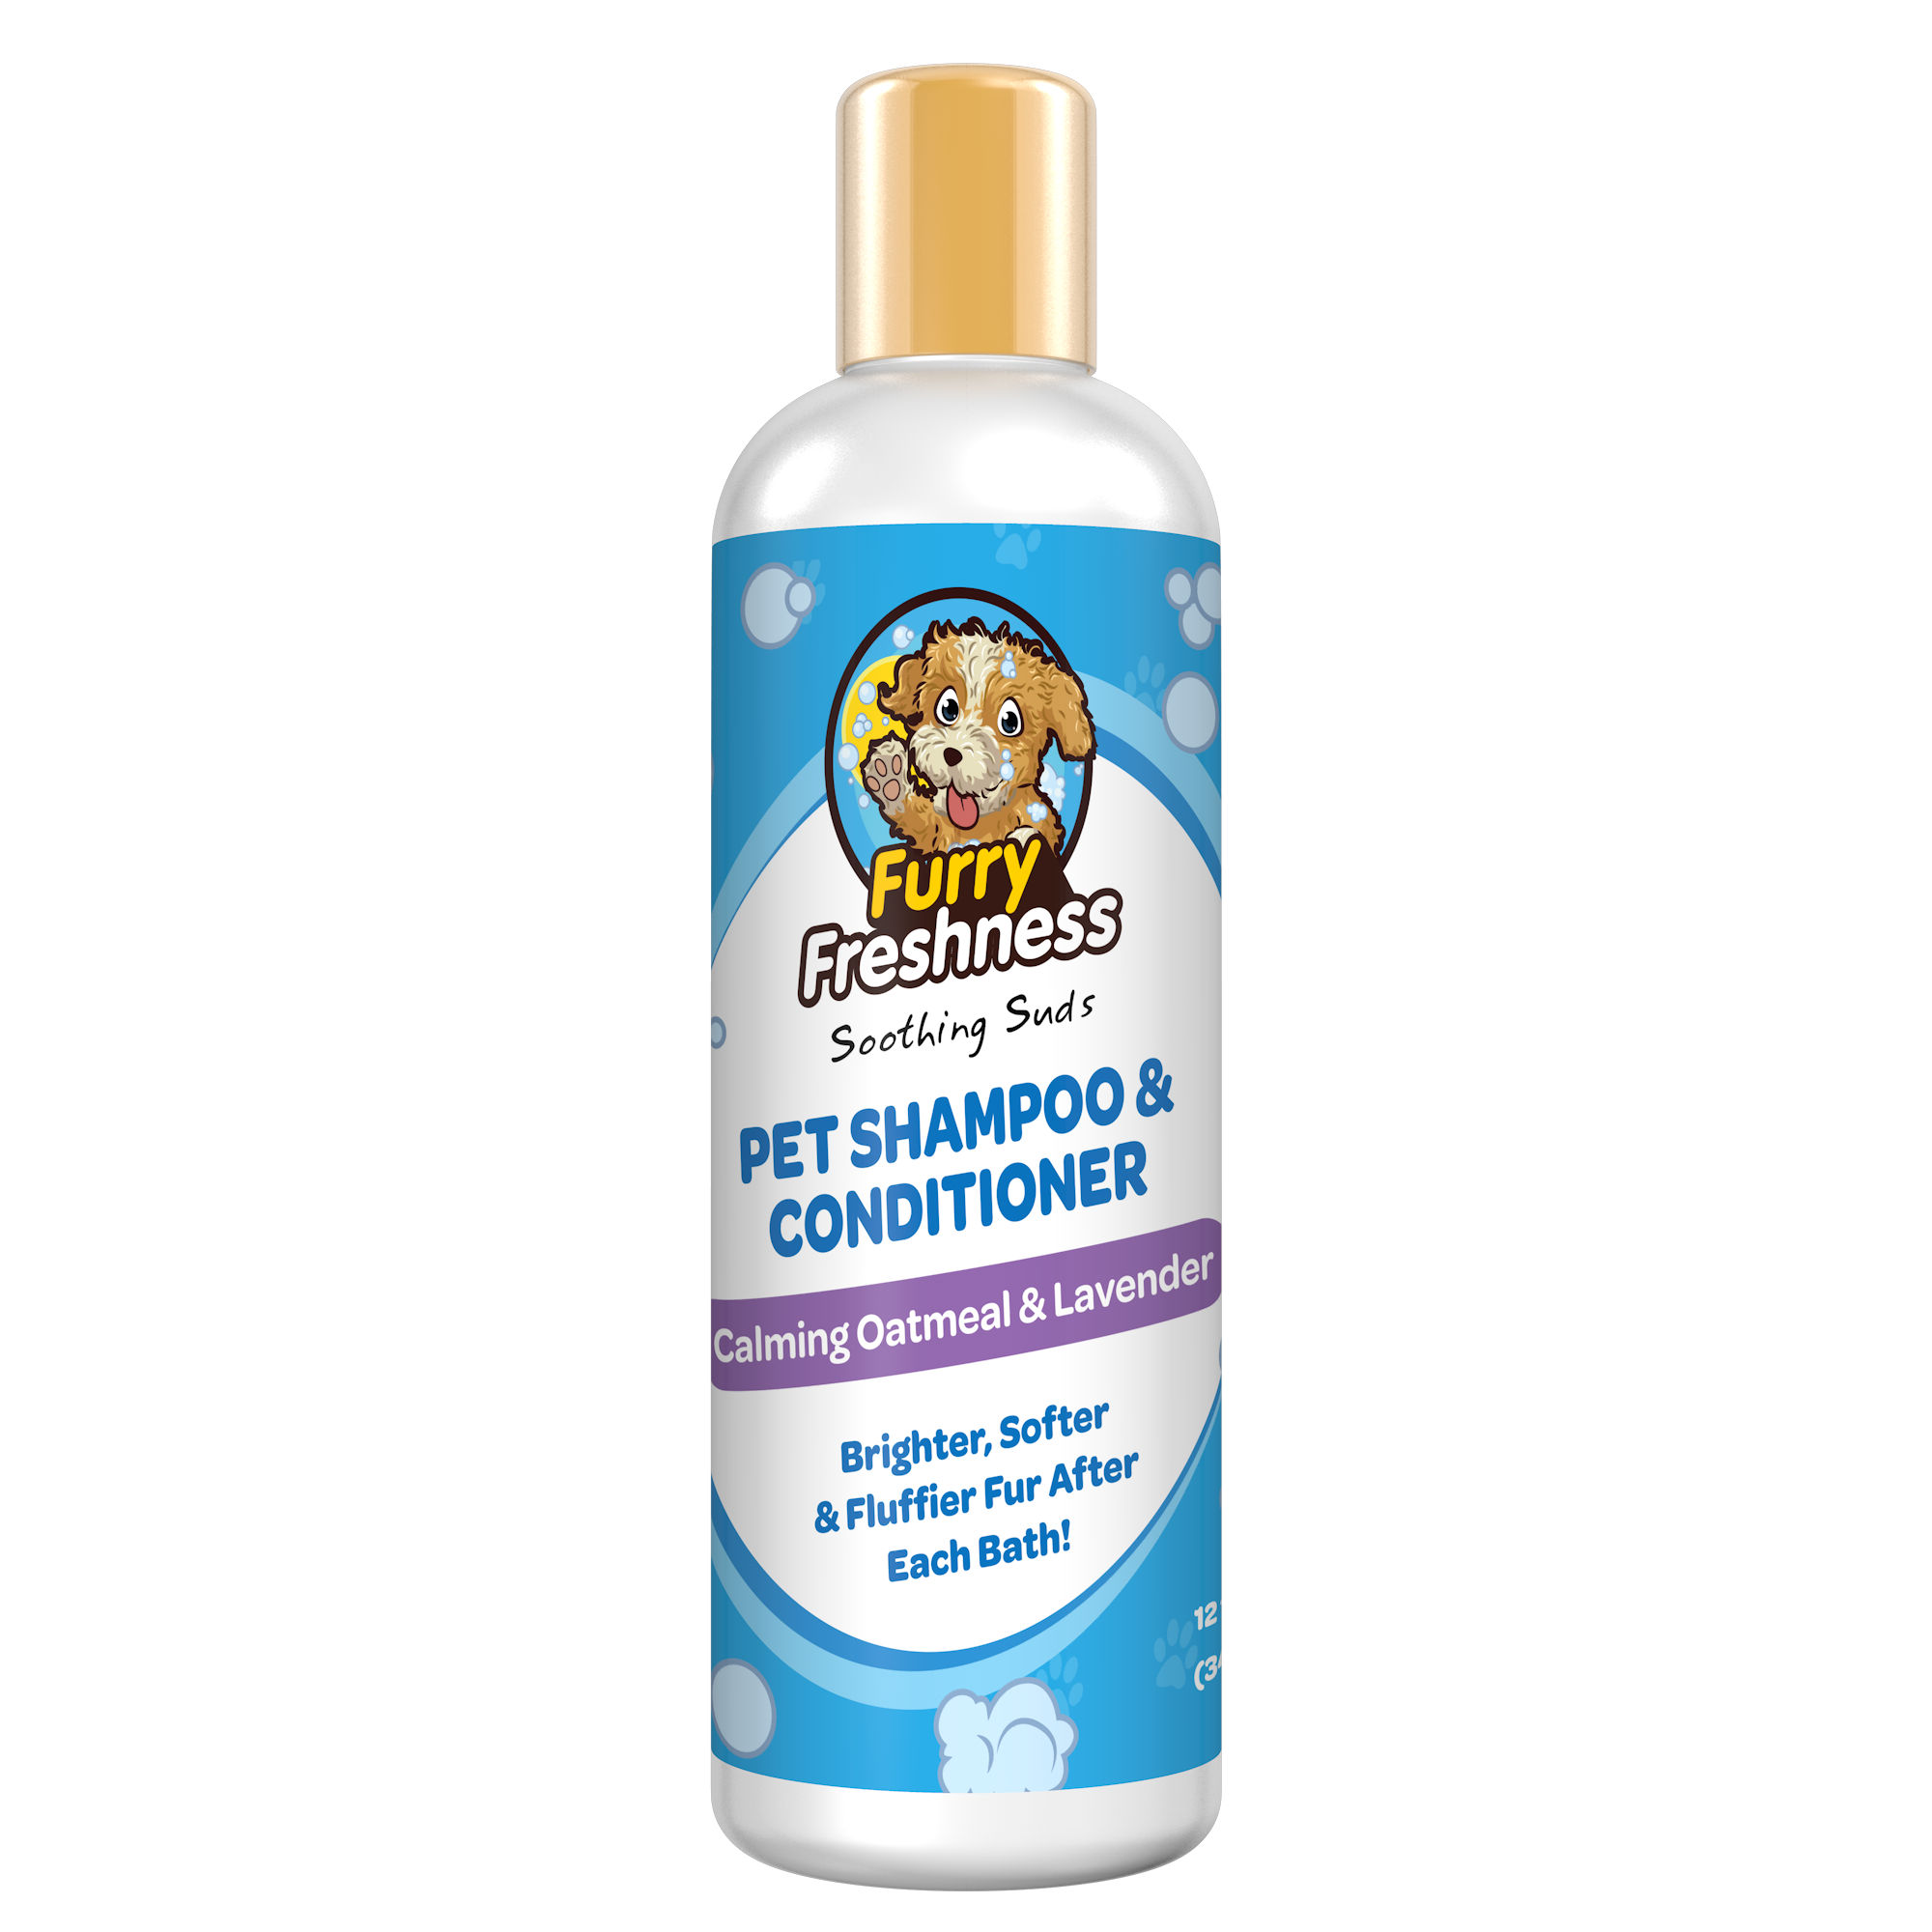 Soothing Suds Plant Based Dog Shampoos